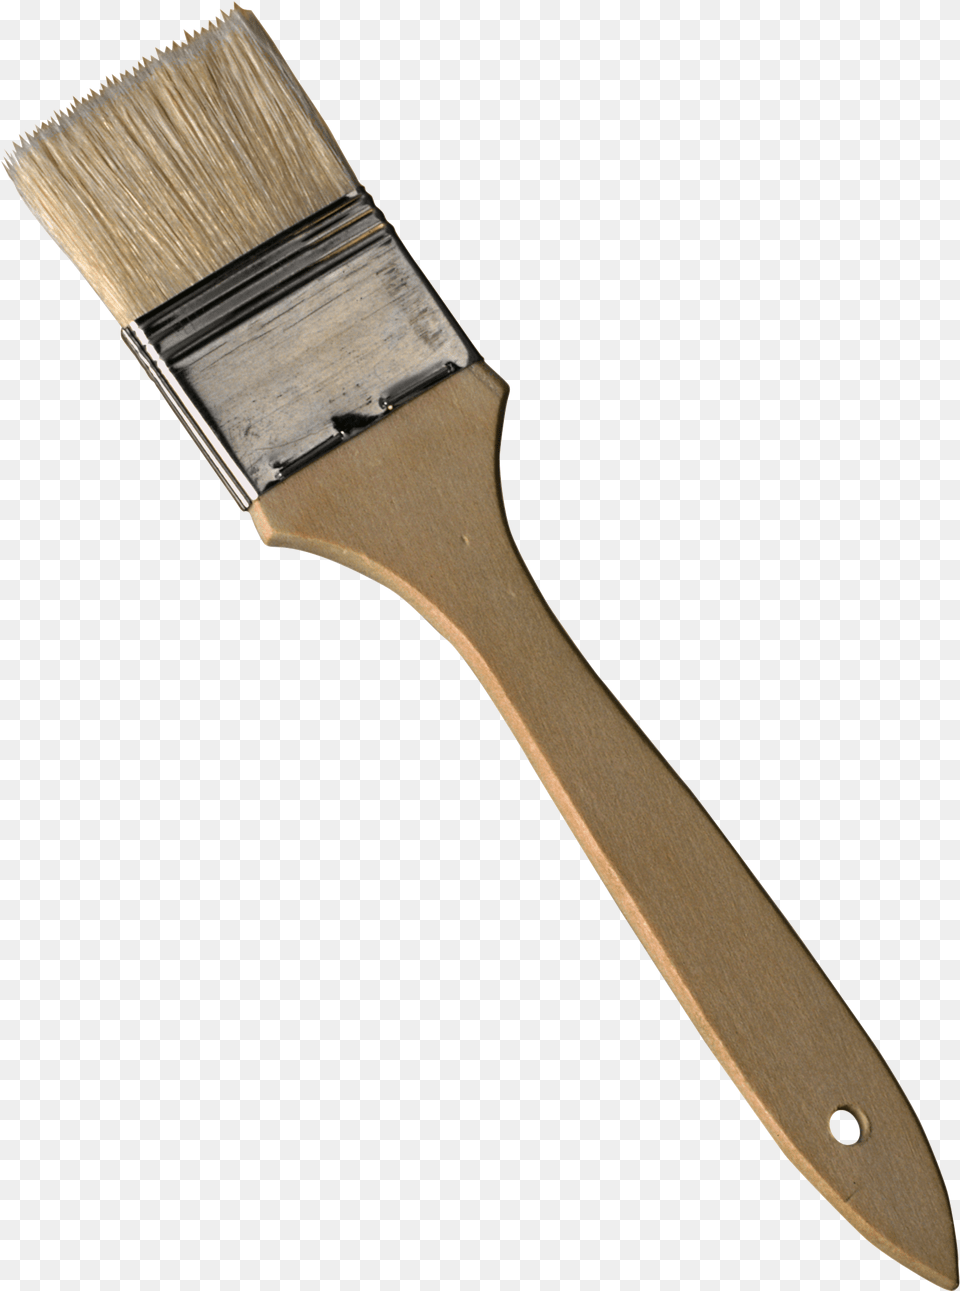 Brush Image Paint Brush No Background, Device, Tool Png